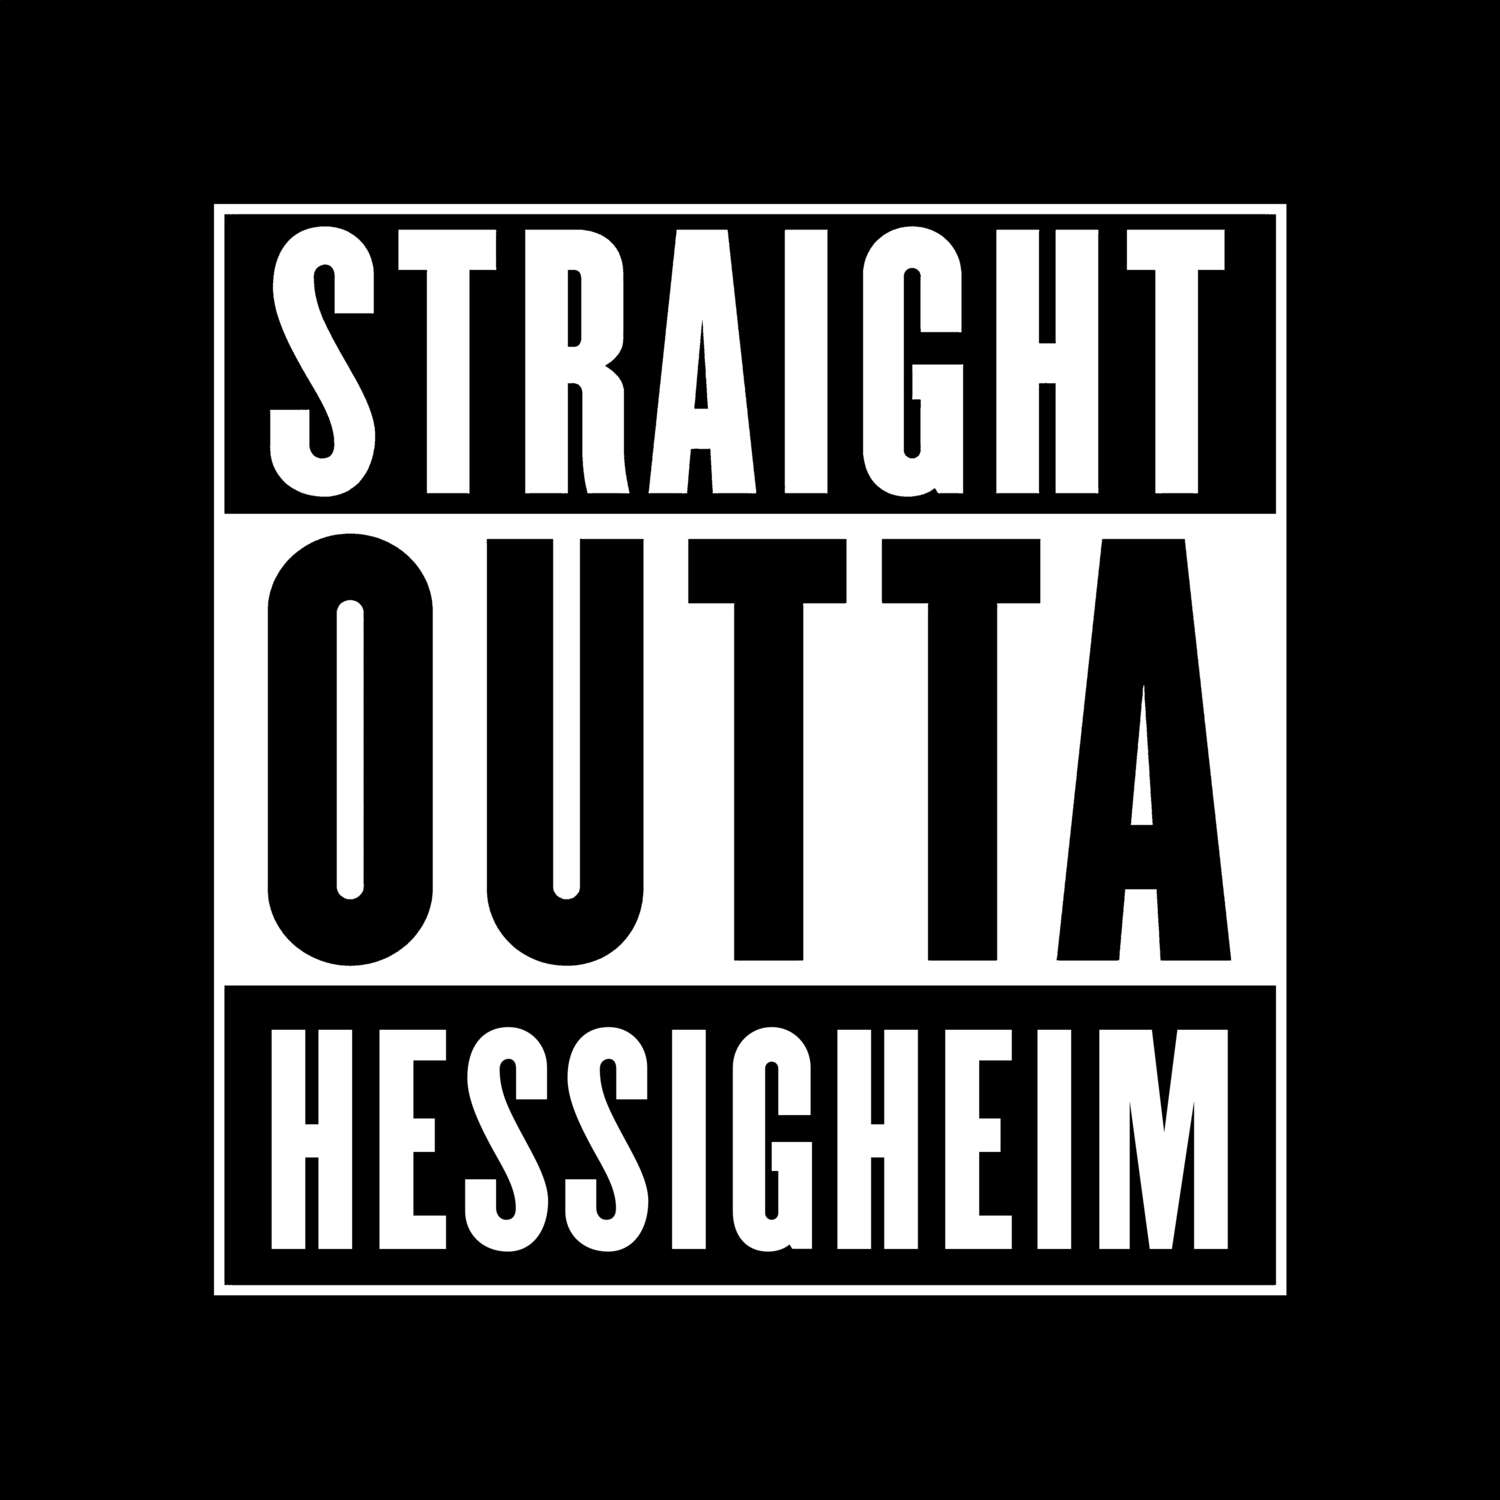 Hessigheim T-Shirt »Straight Outta«